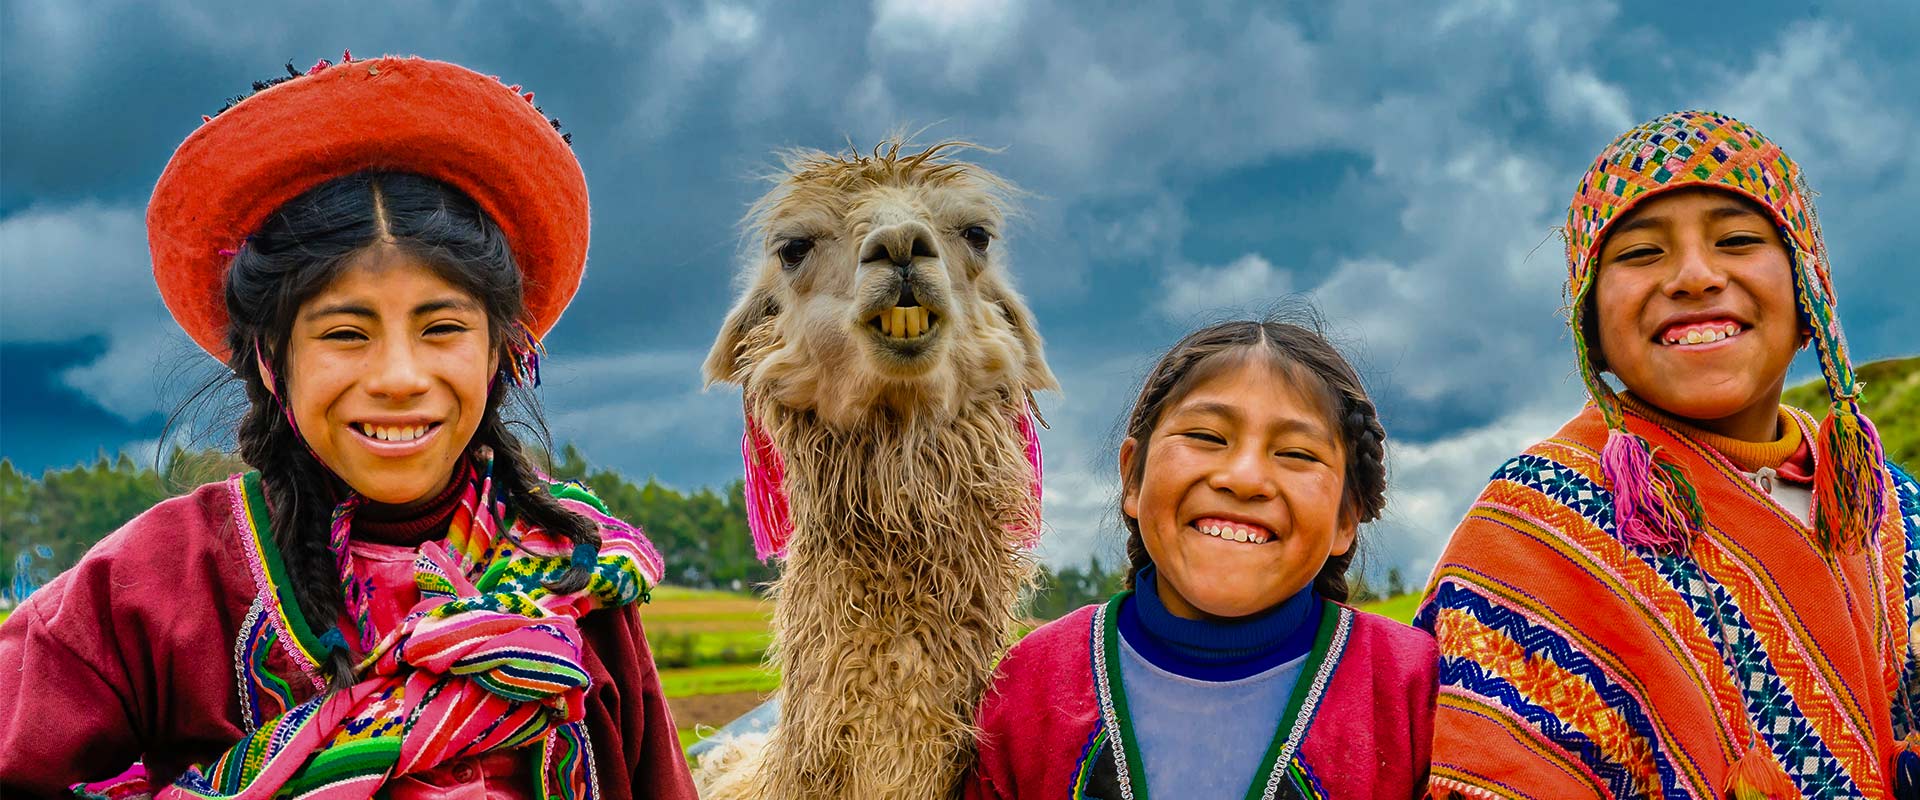 la gente usa ropa tradicional hermosa - Cusco